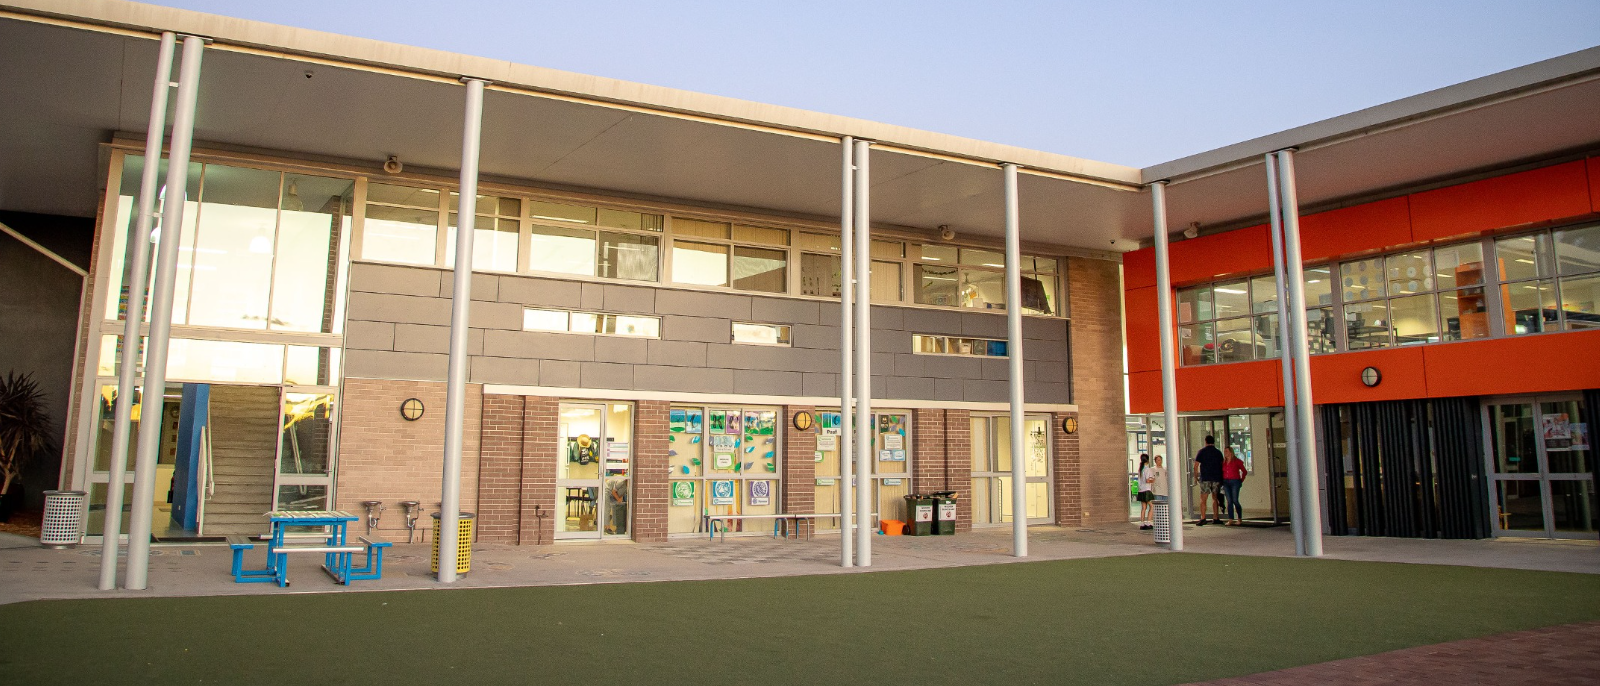 Regents Park Christian School | Private school in Sydney